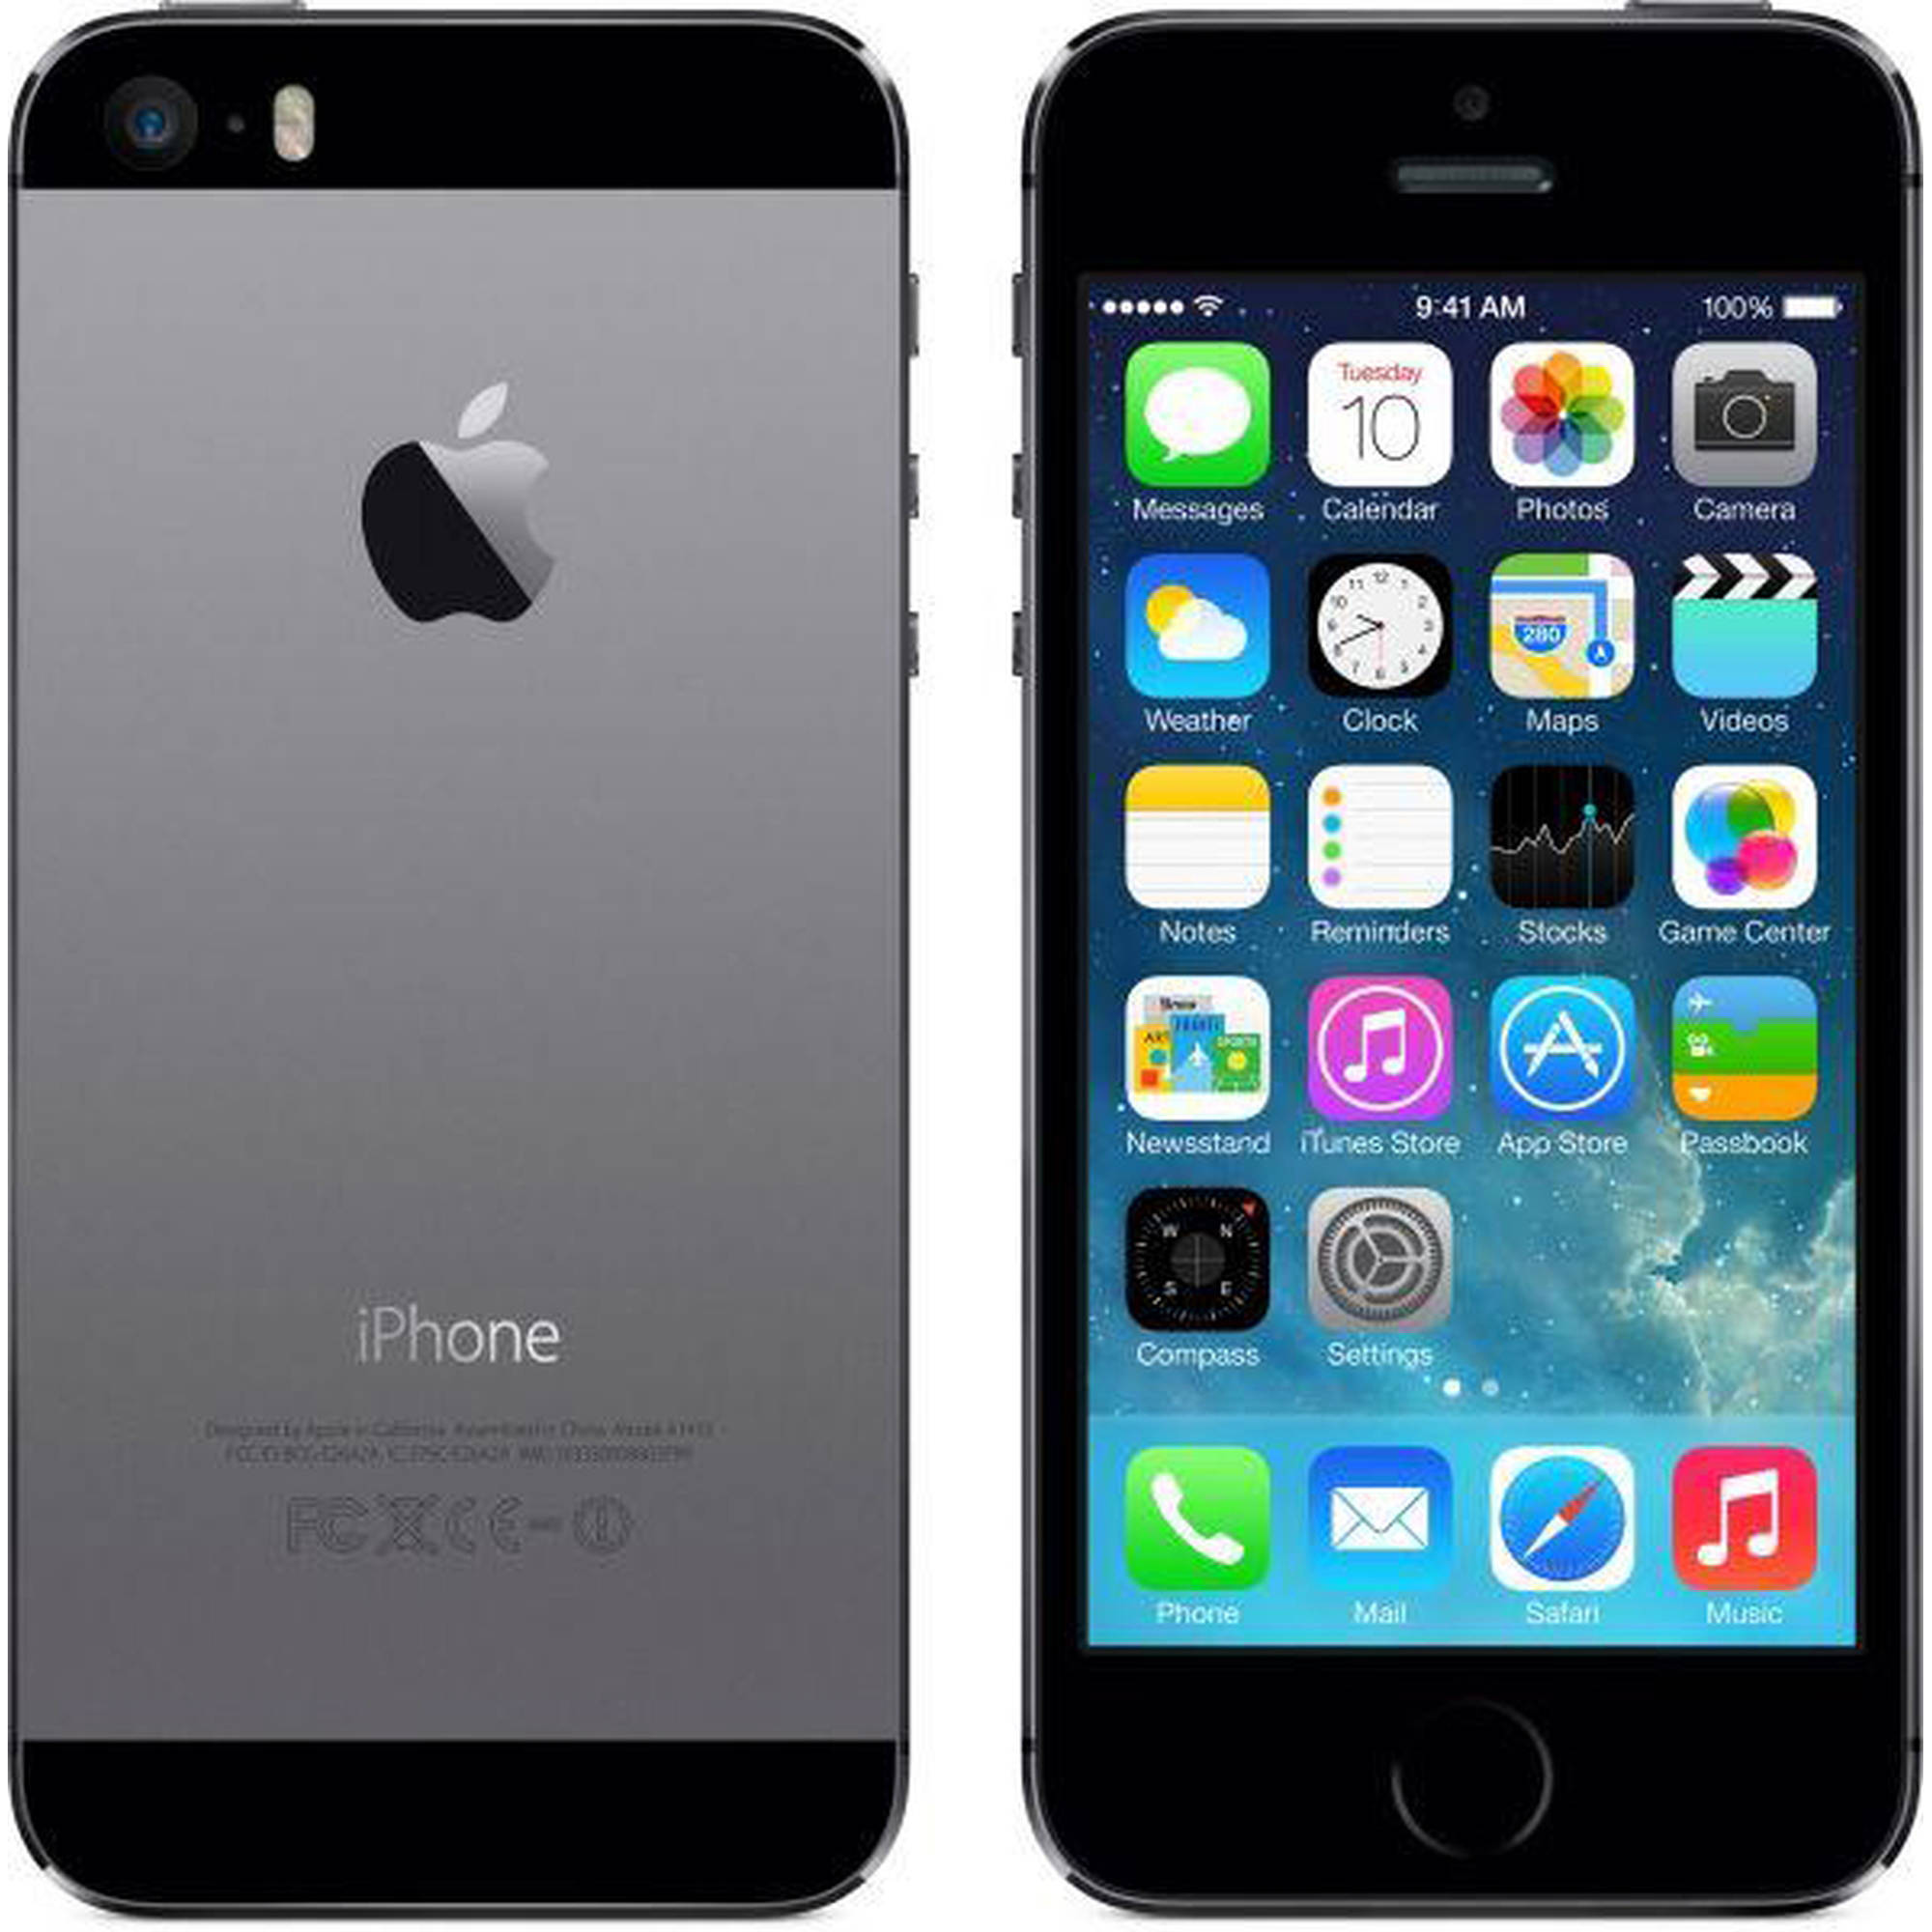 Apple iPhone 5s 16GB Unlocked GSM 4G LTE Dual-Core Phone w/ 8MP ...